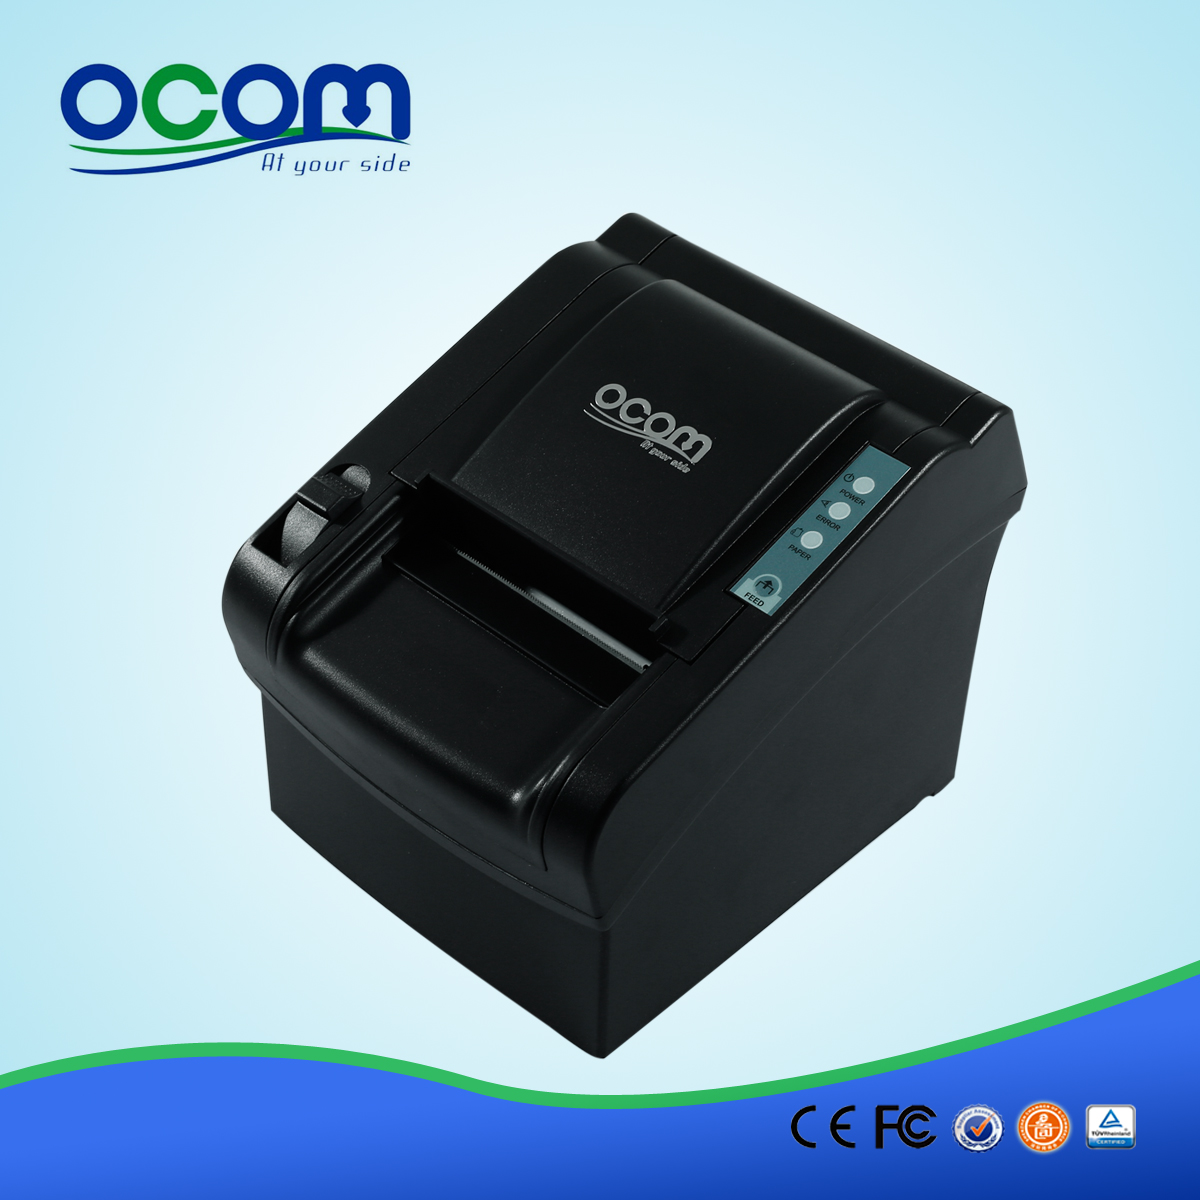 OCPP-802: verkoop pos bonprinter, 80mm thermische bonprinter